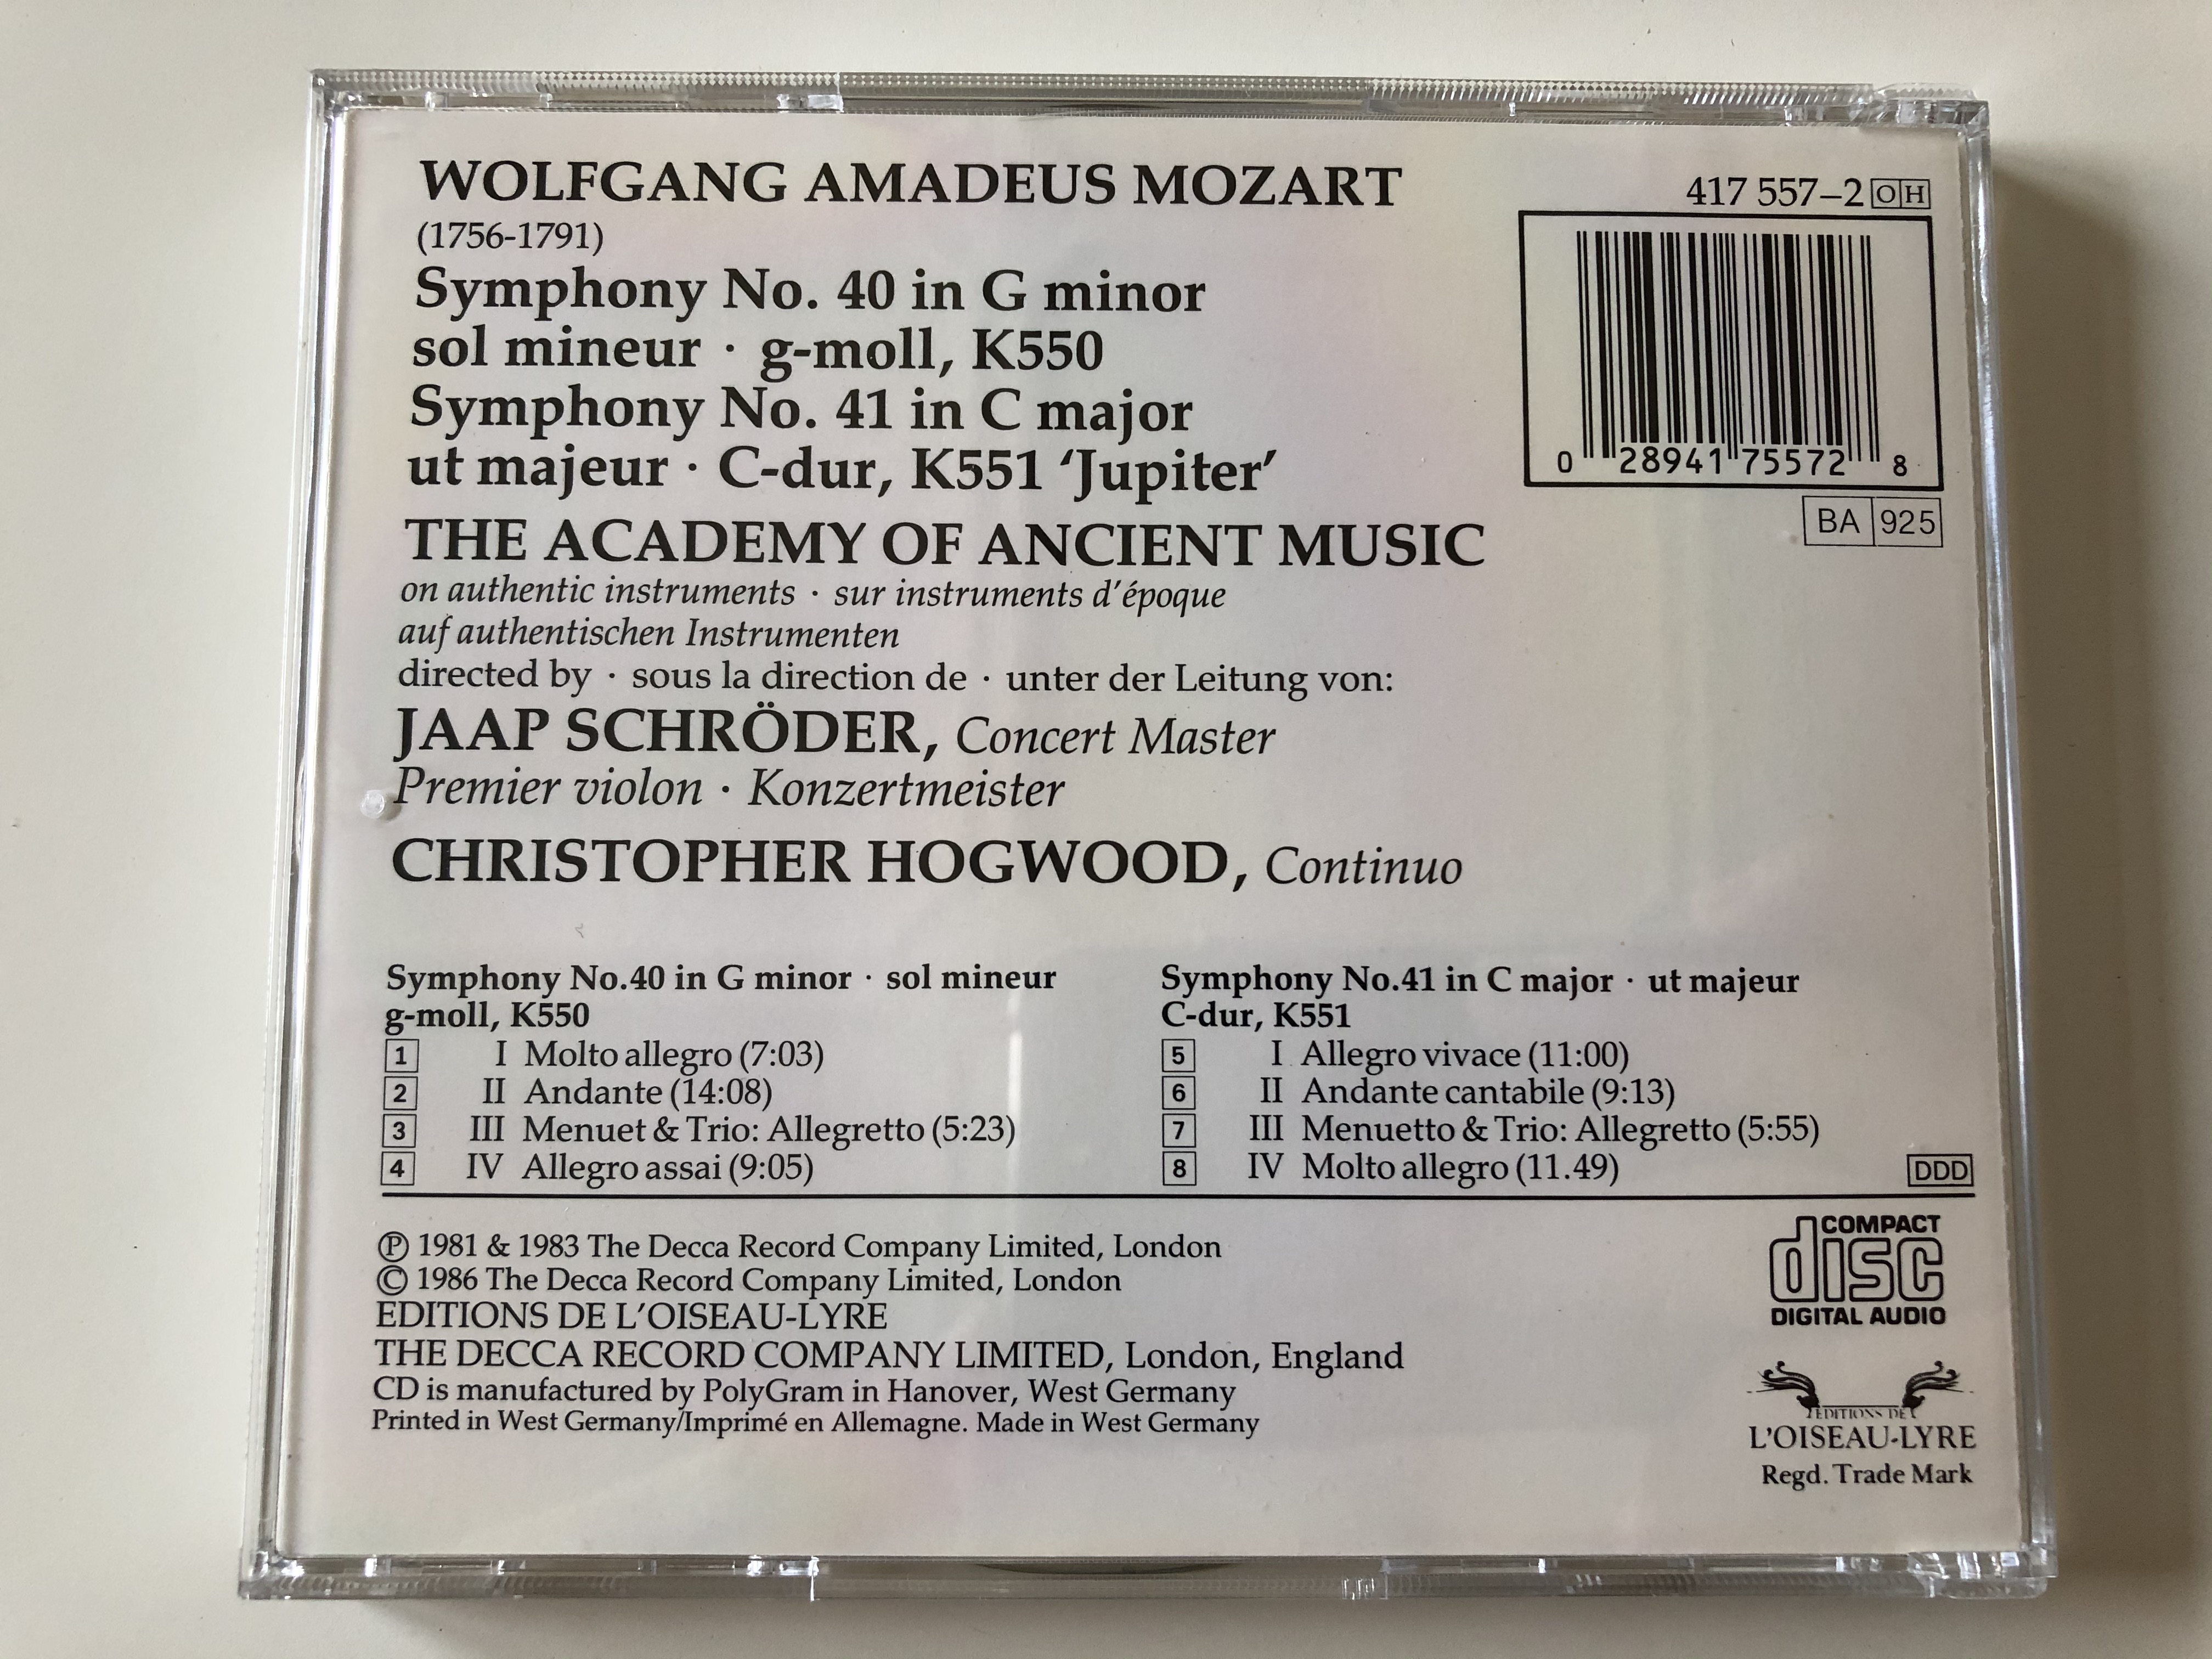 mozart-symphony-no.-40-symphony-no.-41-jupiter-the-academy-of-ancient-music-jaap-schr-der-christopher-hogwood-the-decca-record-co.-ltd-audio-cd-1986-stereo-417-557-2-8-.jpg